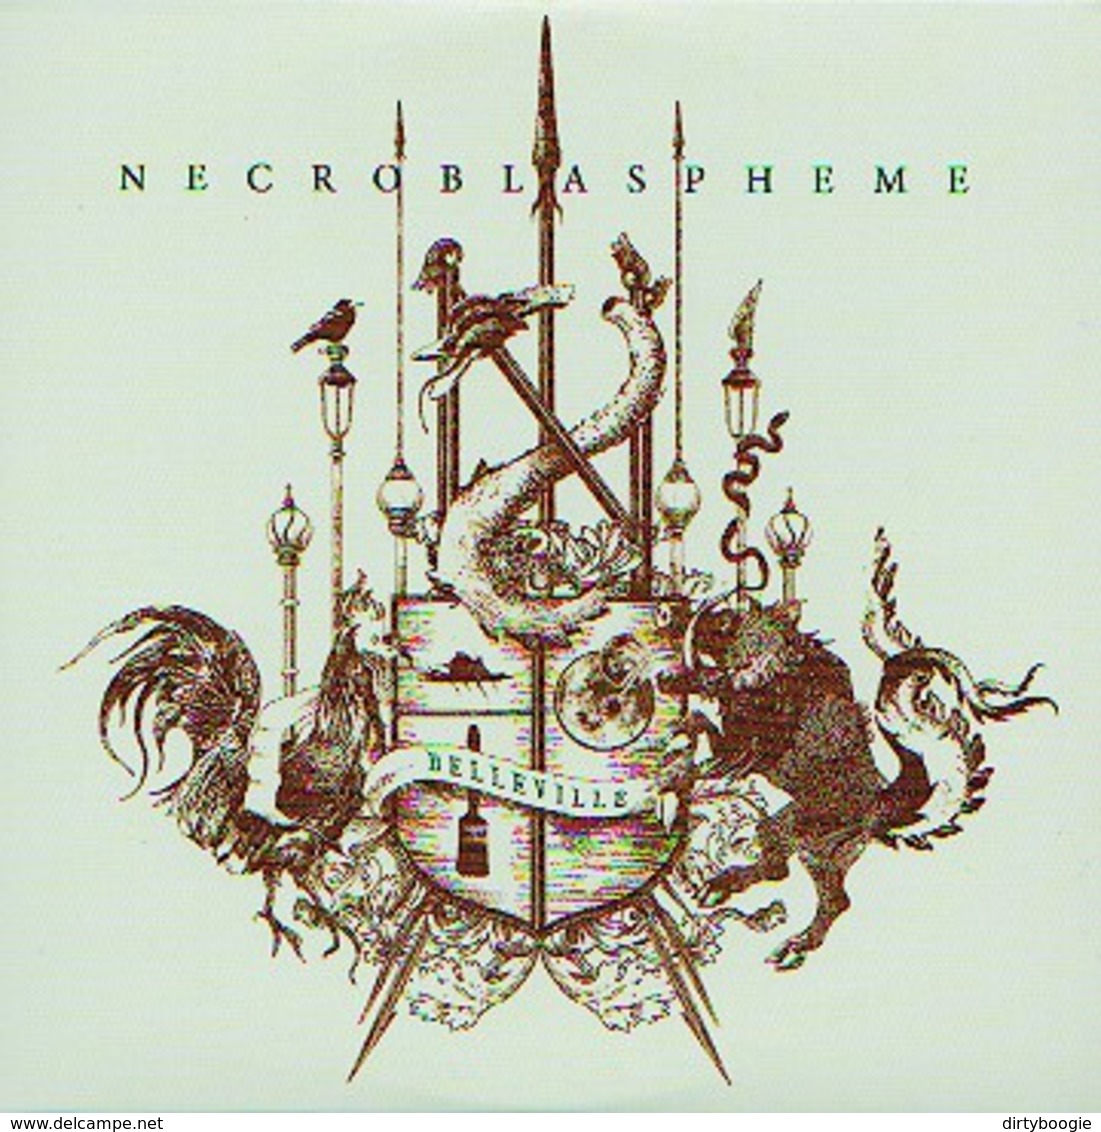 NECROBLASPHEME - Belleville - CD - DEATH BLACK METAL - Hard Rock & Metal